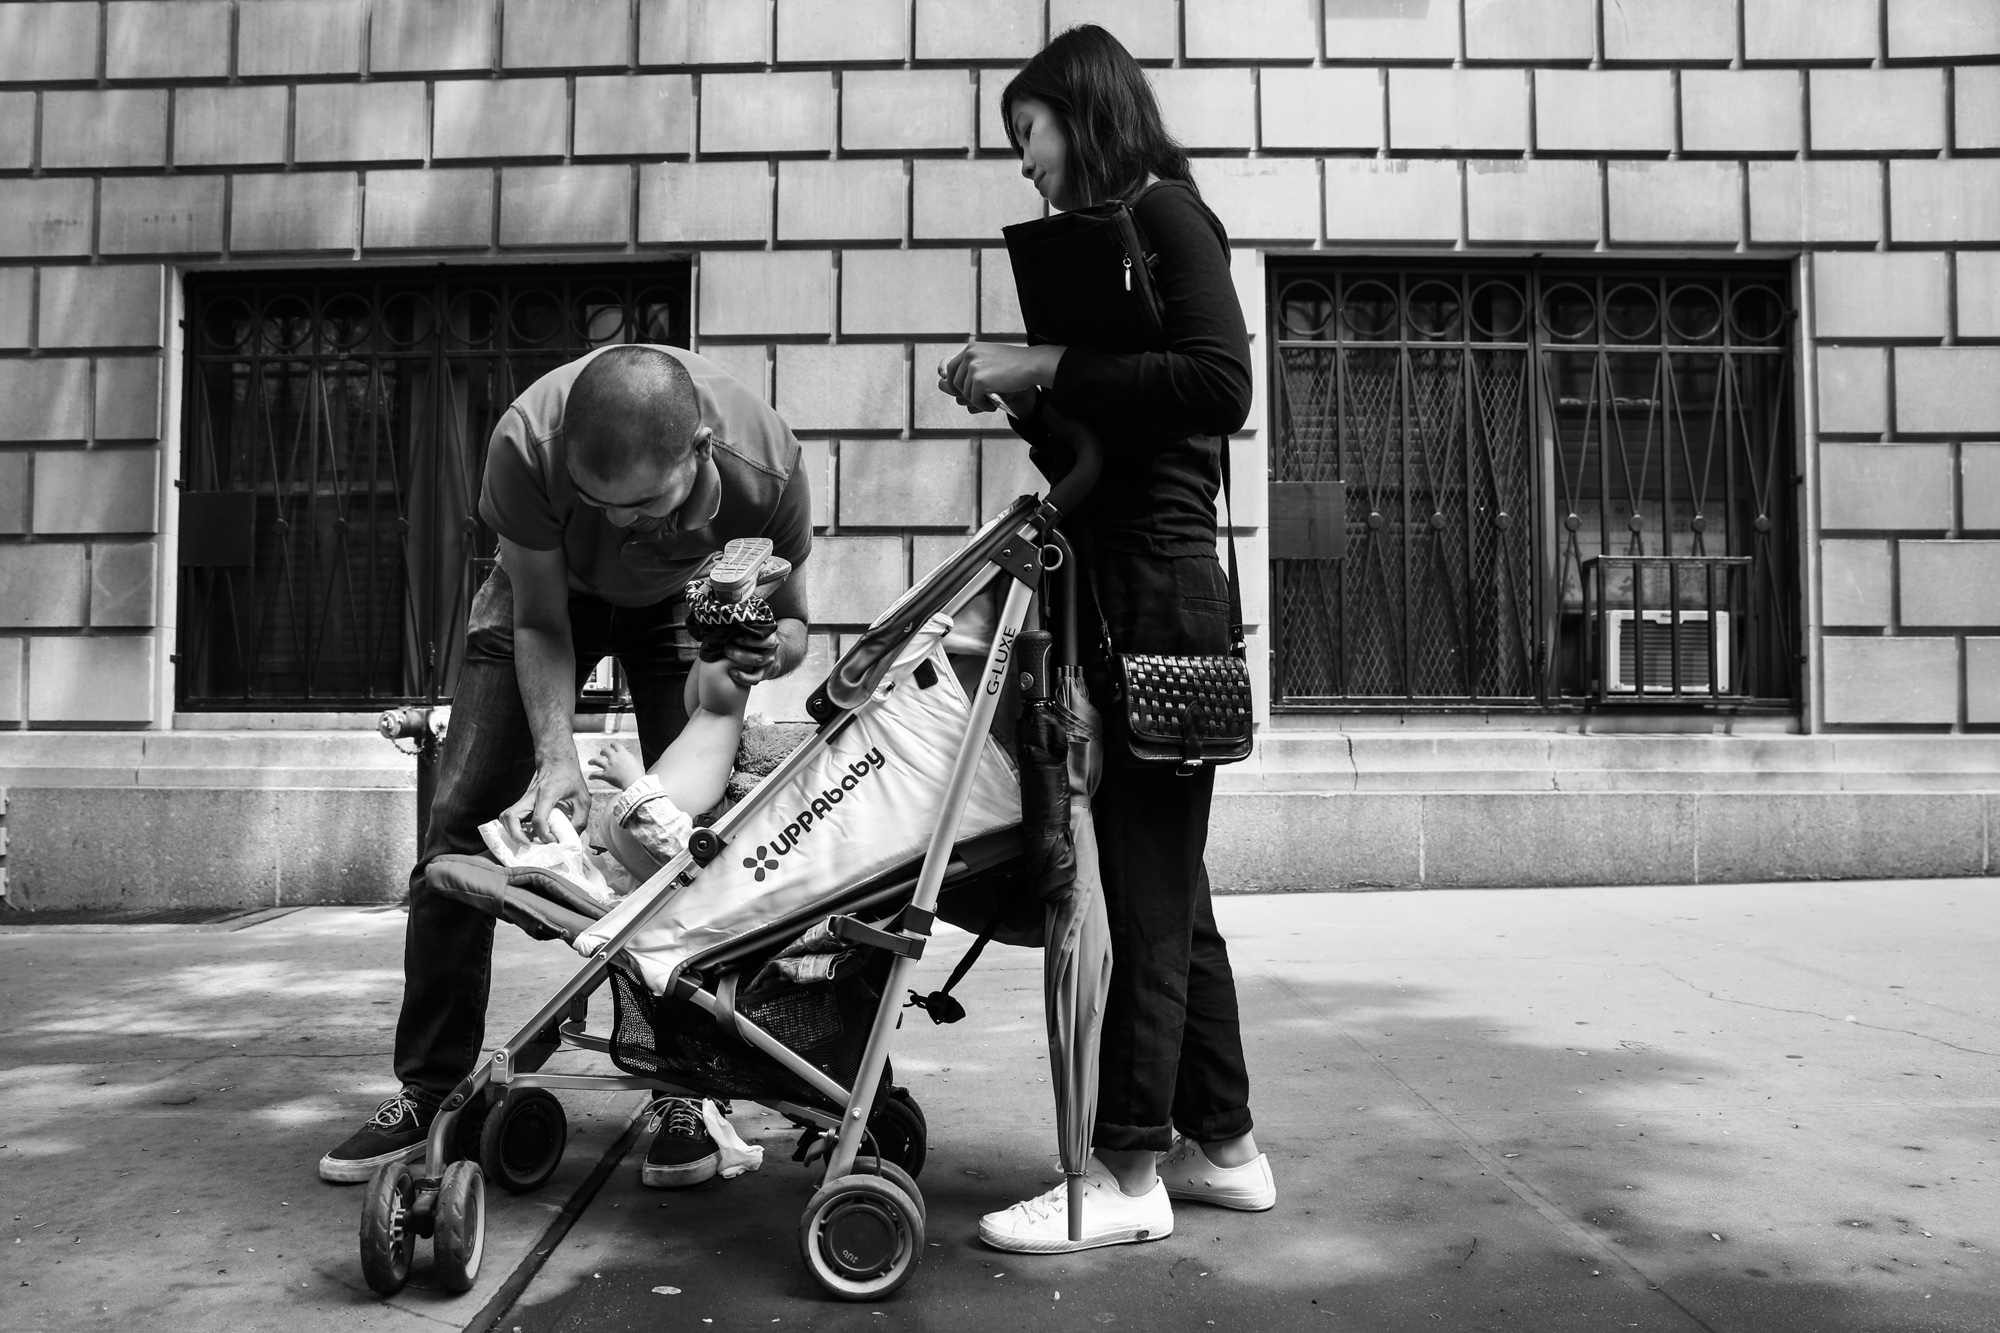 Man changes diaper on the sidewalk in a stroller